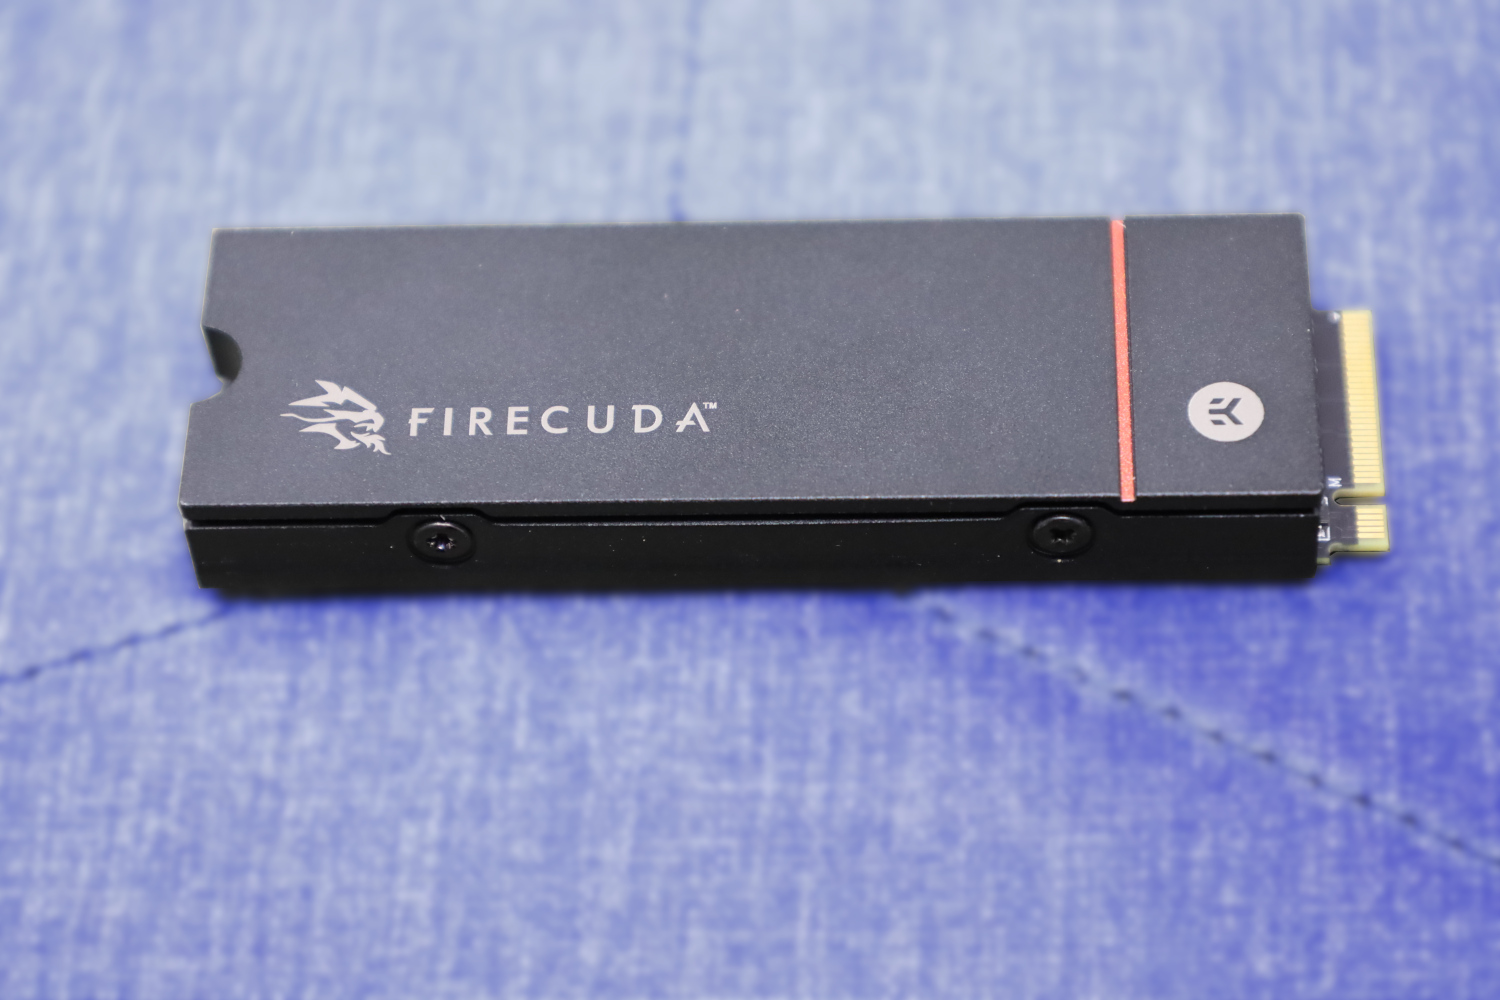 Firecuda 530 1Tb